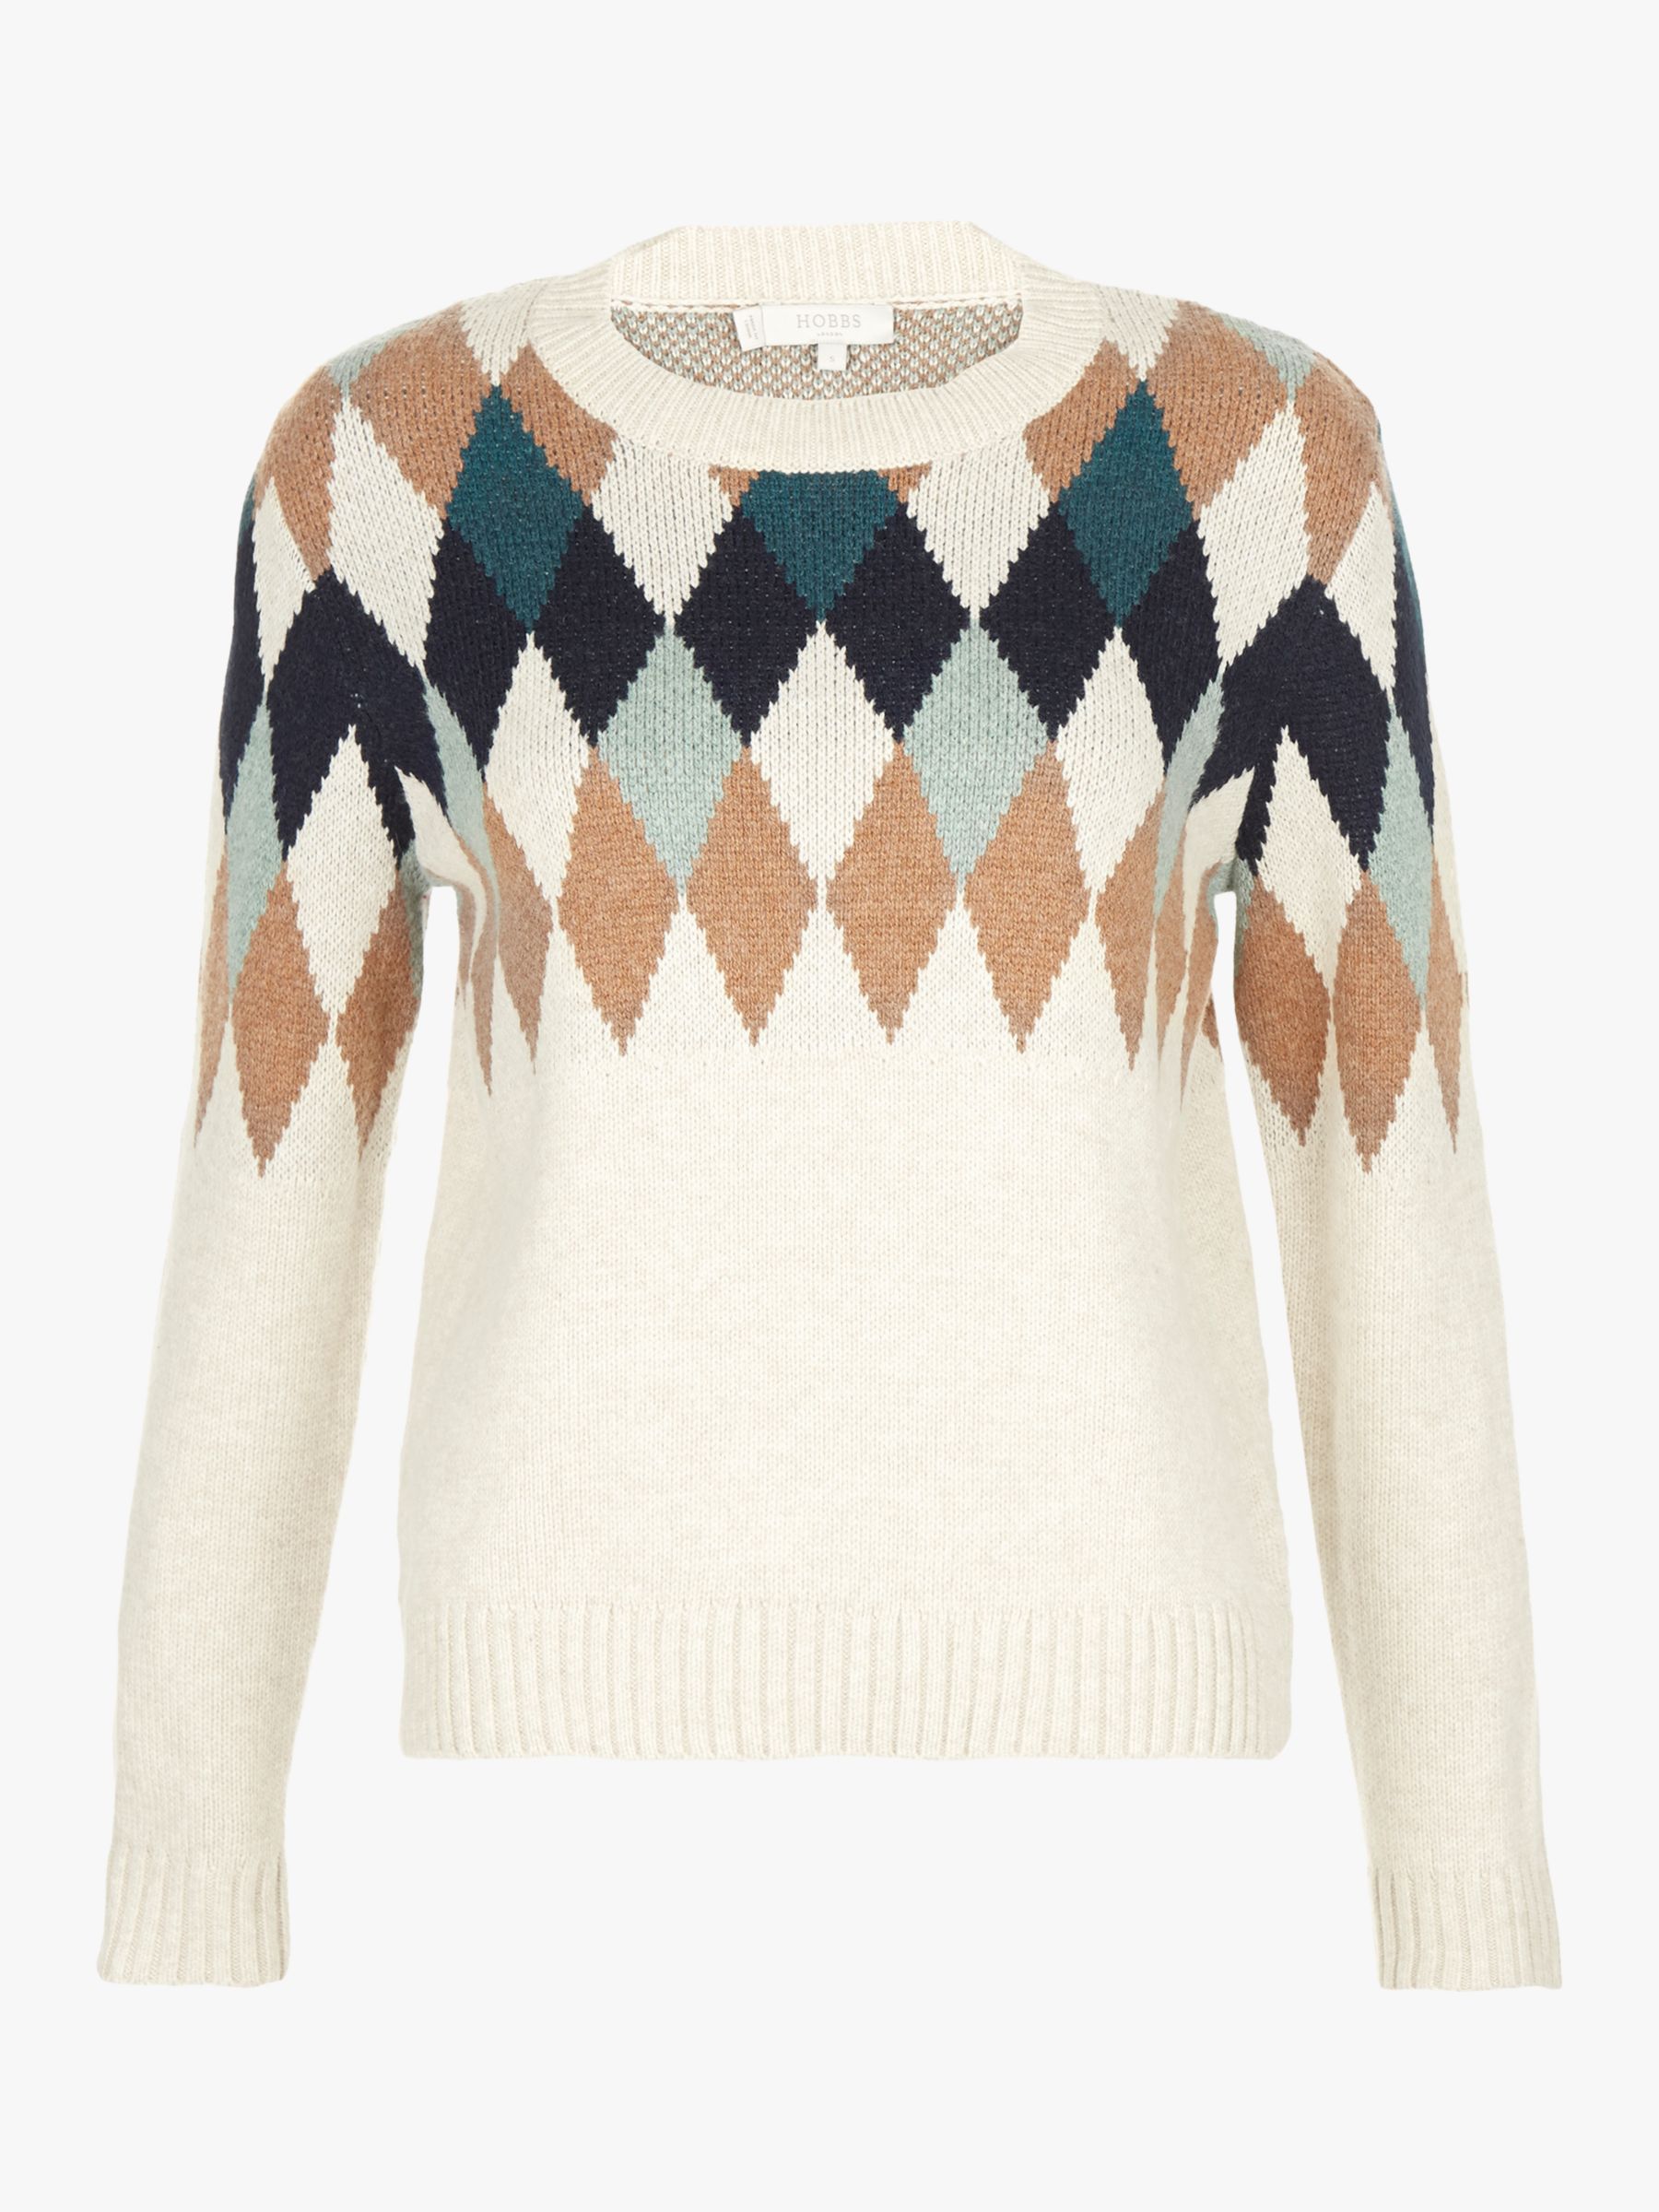 Hobbs Lupin Argyle Diamond Knit Sweater, Ivory/Multi